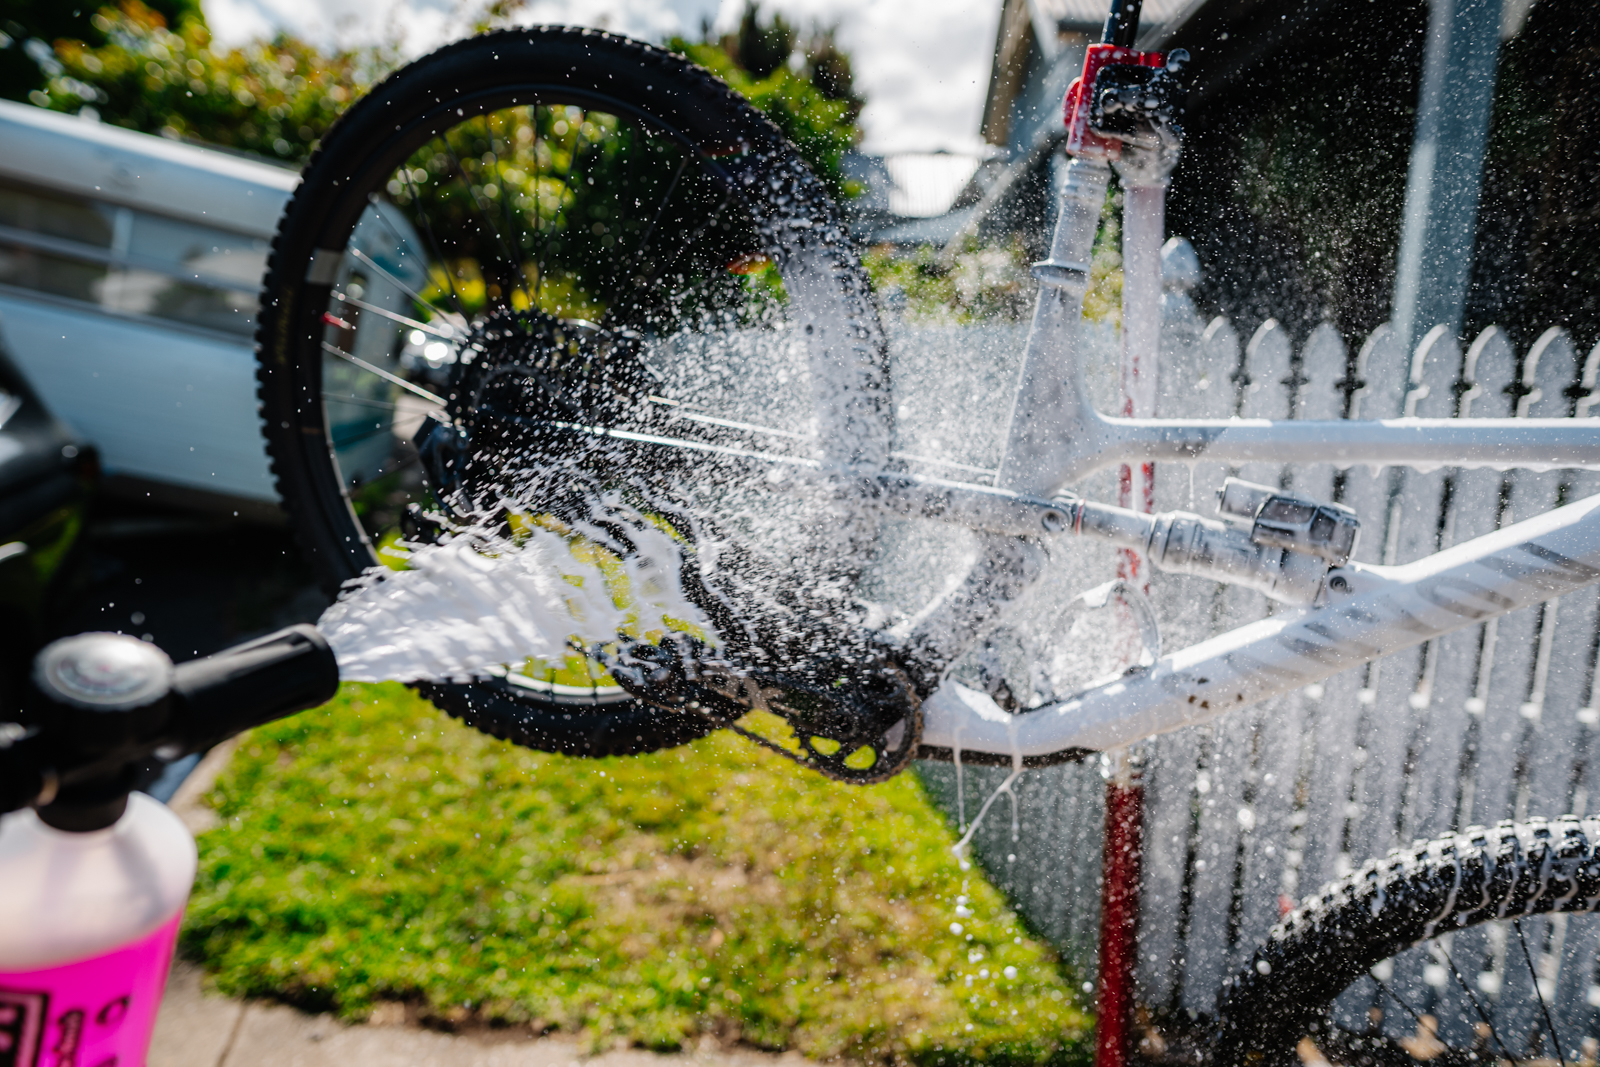 muc-off pressure washer foam bicycle cleaner